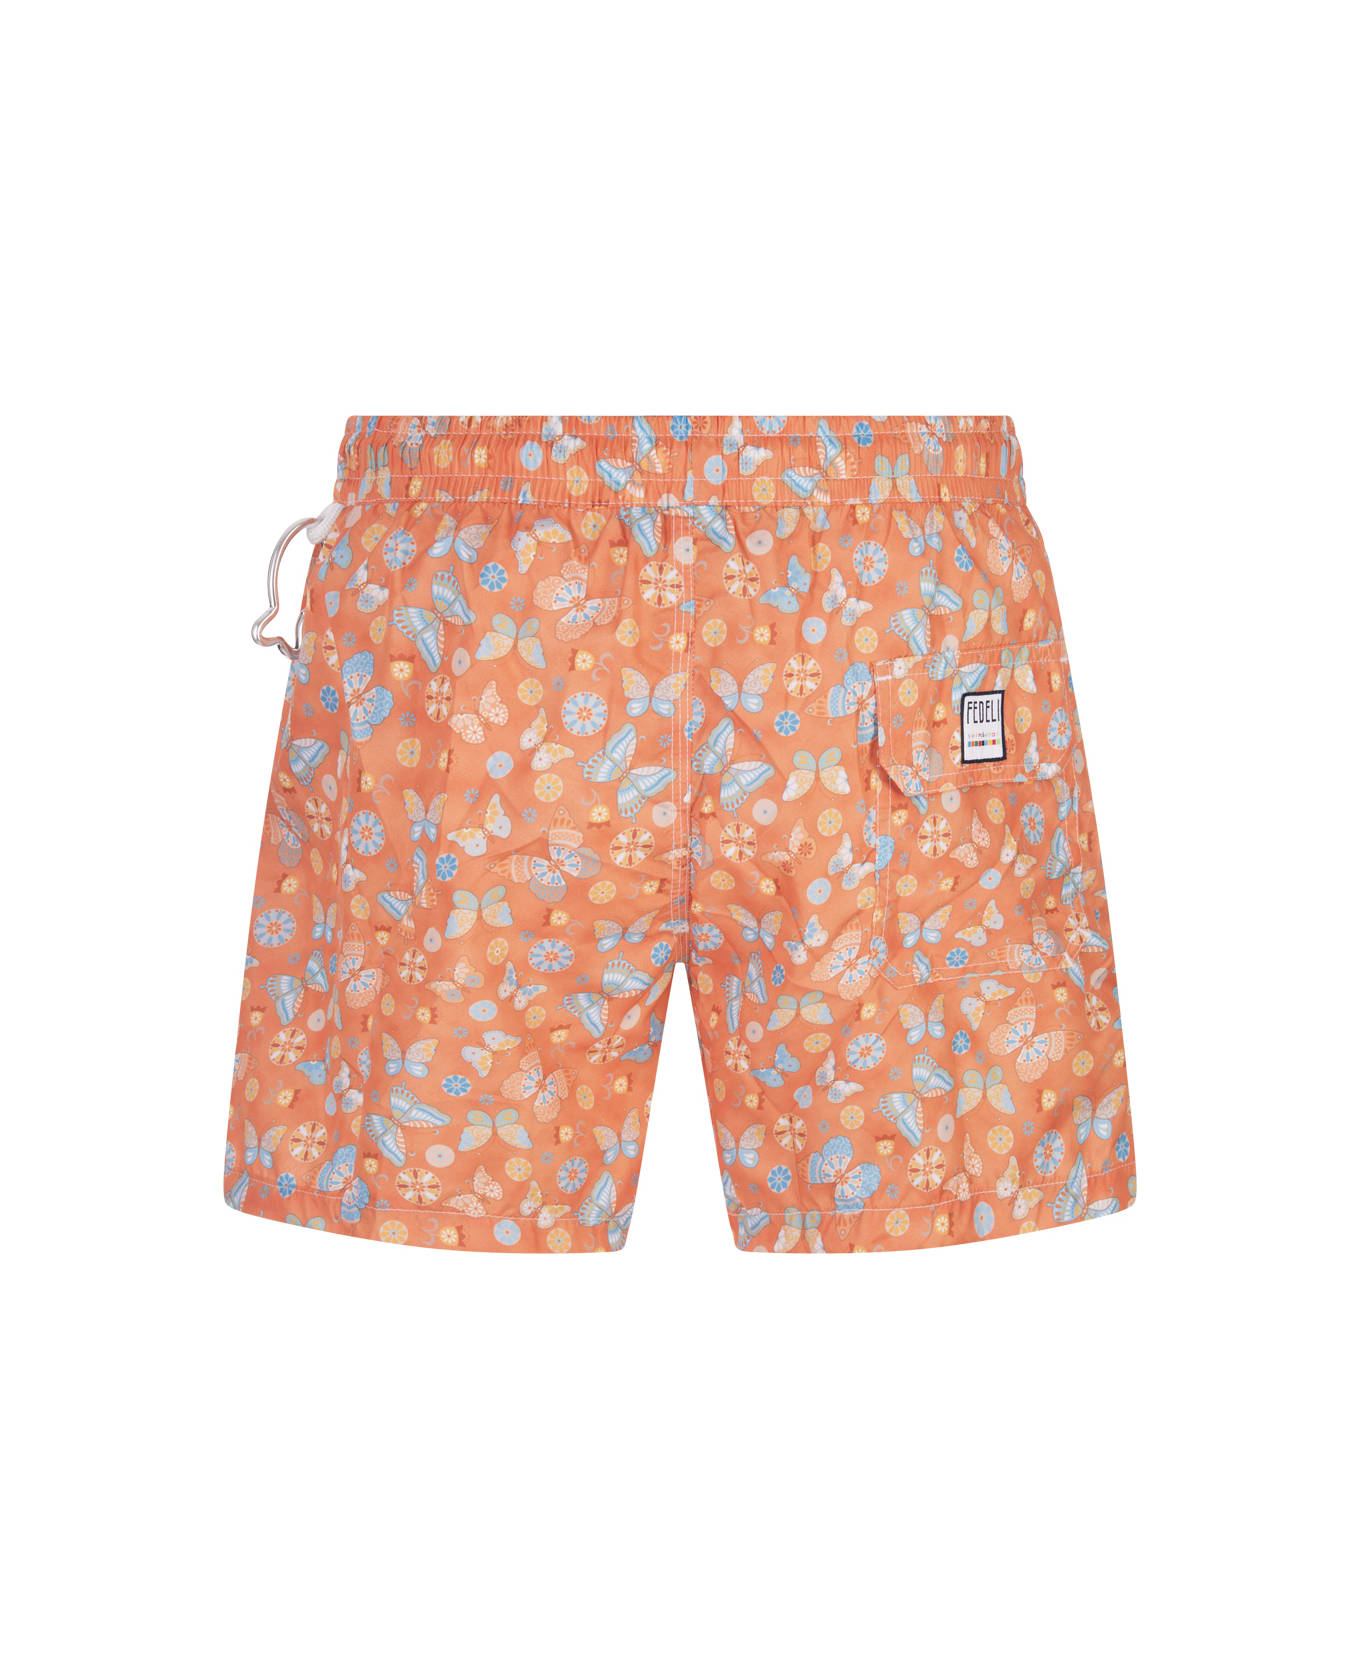 Fedeli Orange Swim Shorts With Butterfly Print - Orange